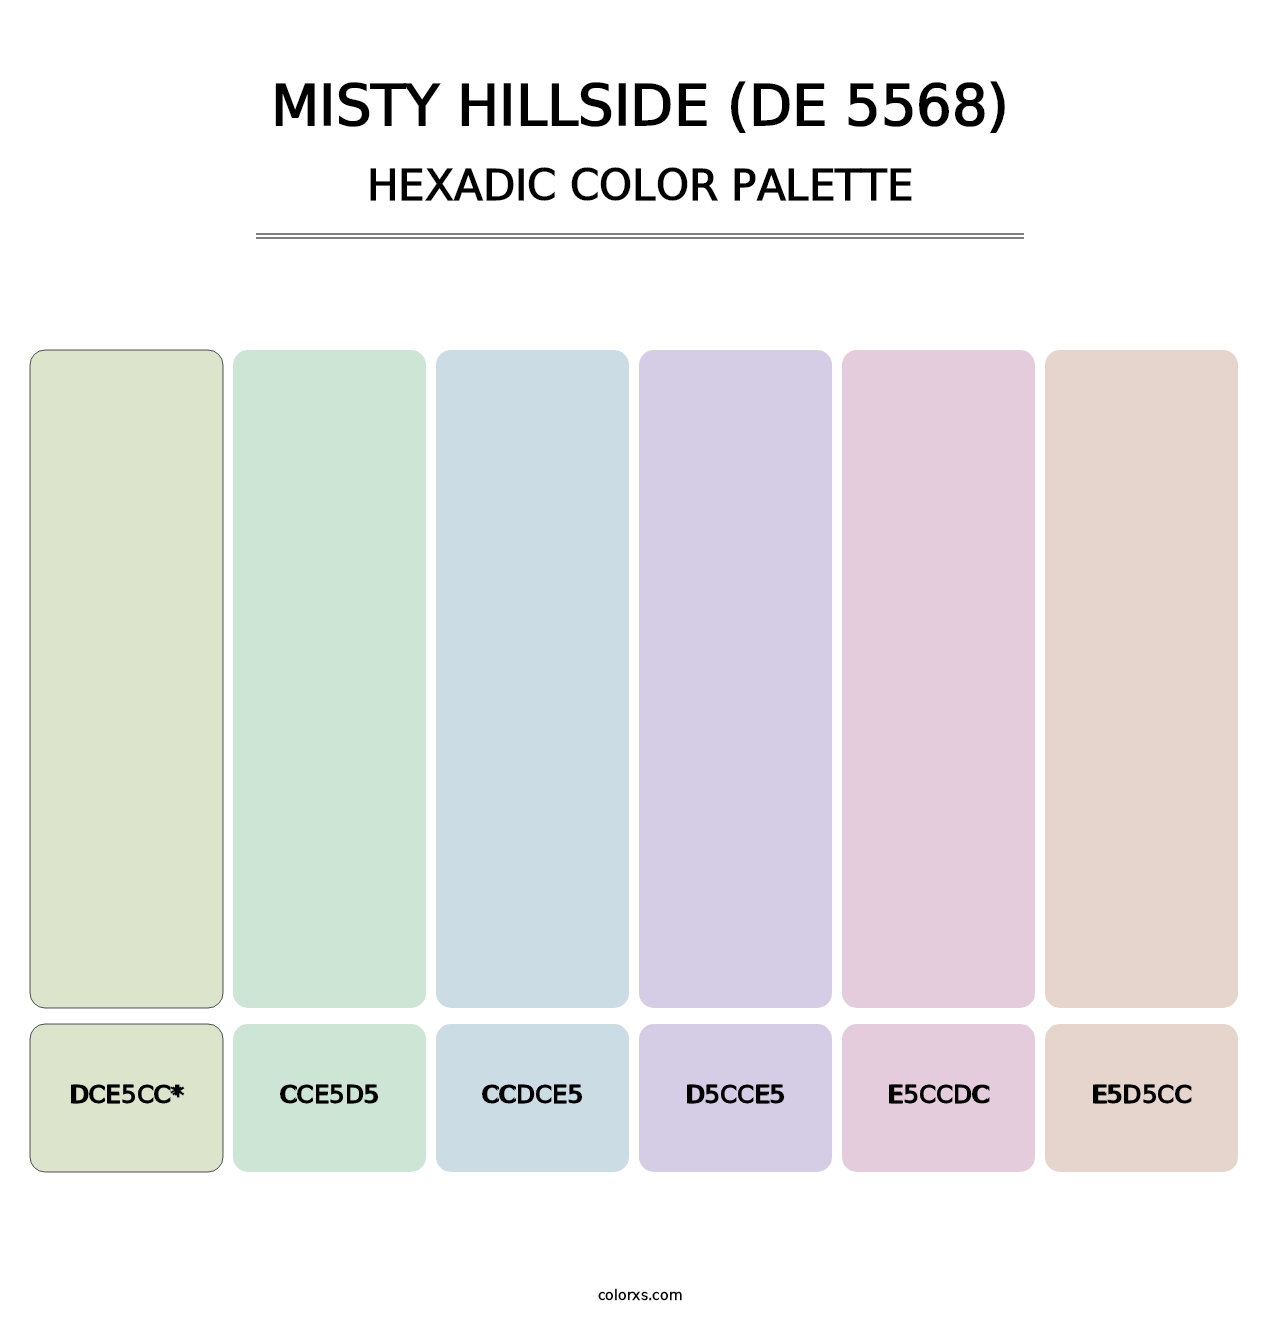 Misty Hillside (DE 5568) - Hexadic Color Palette